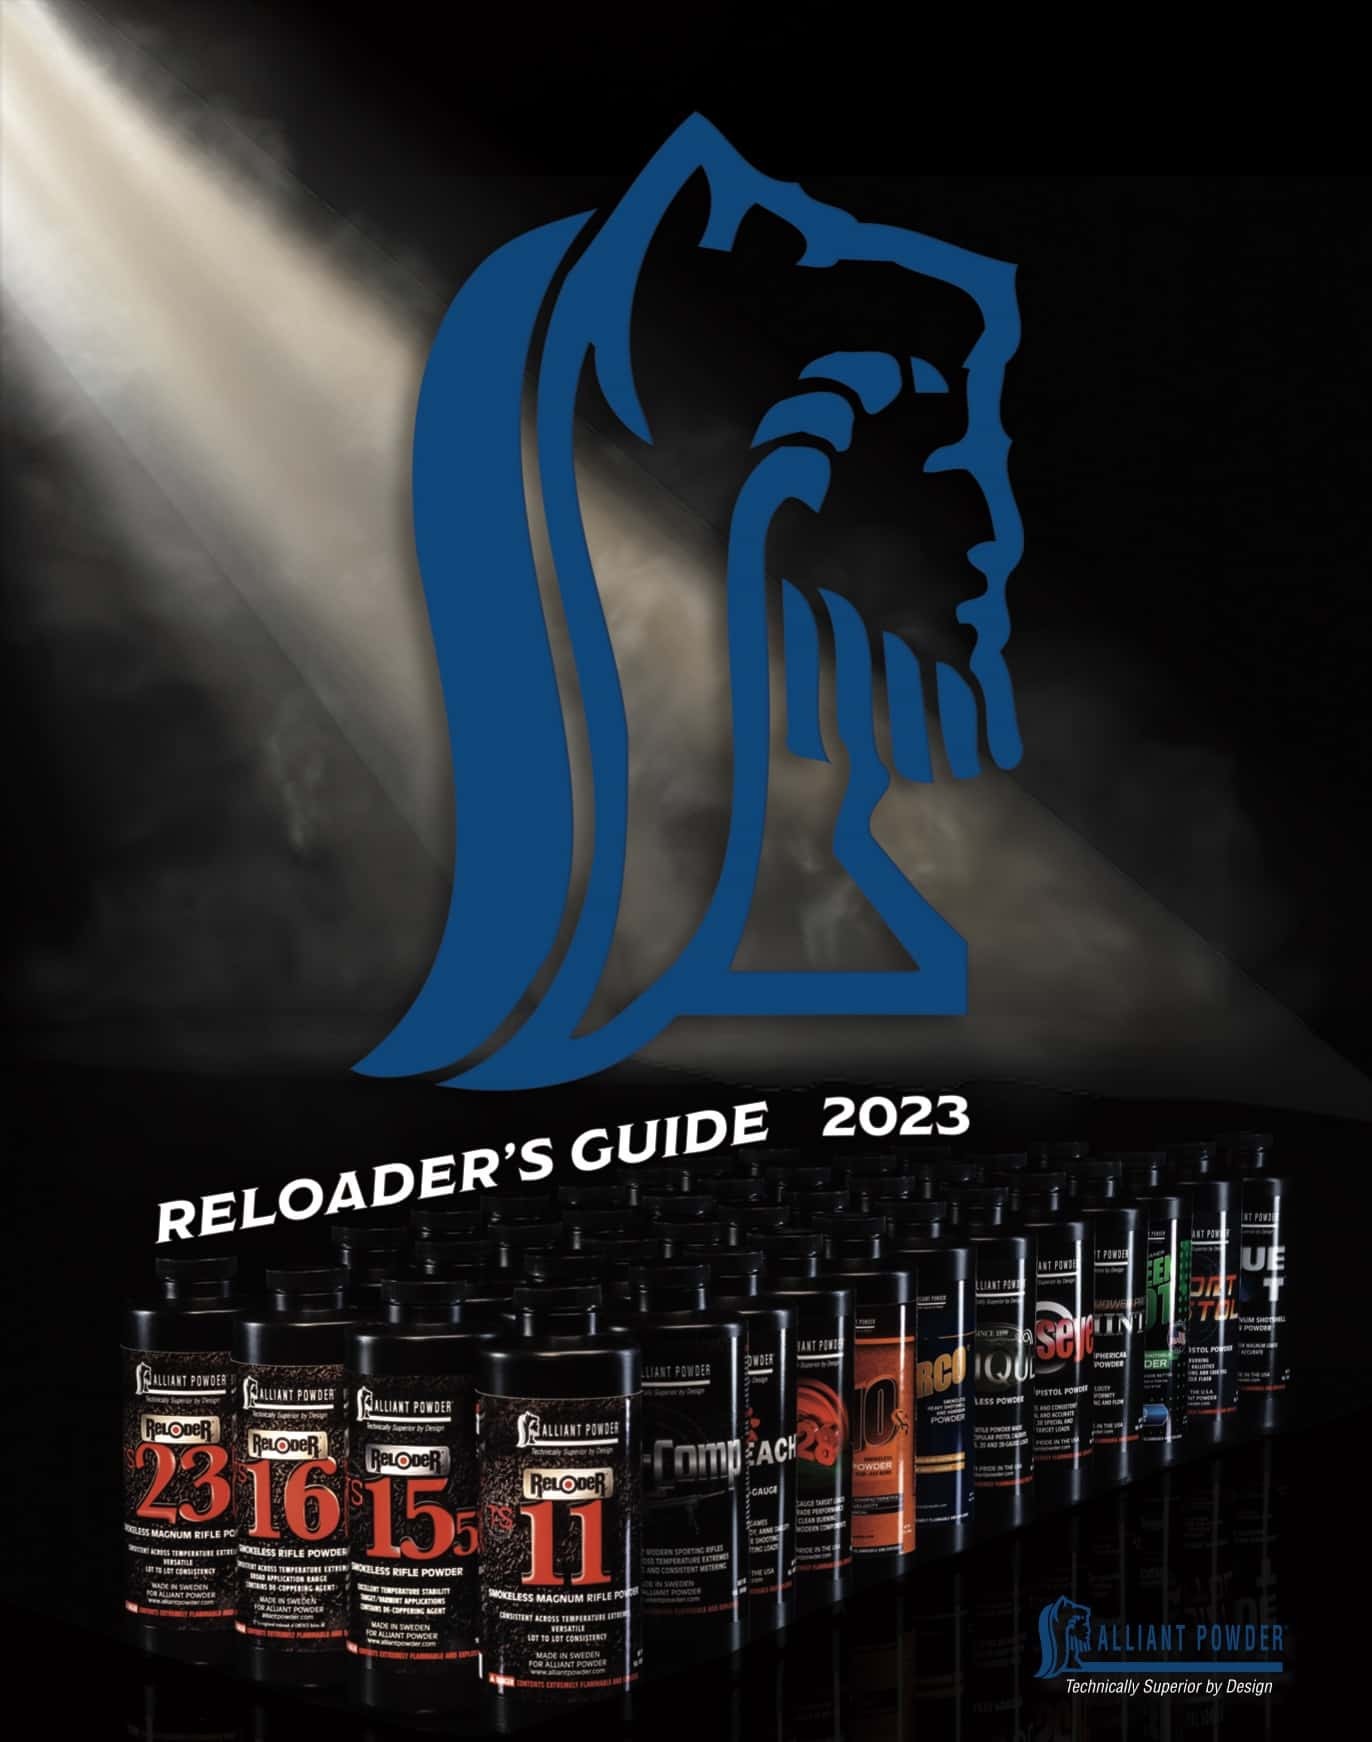 Alliant Powder 2023 Reloaders Guide